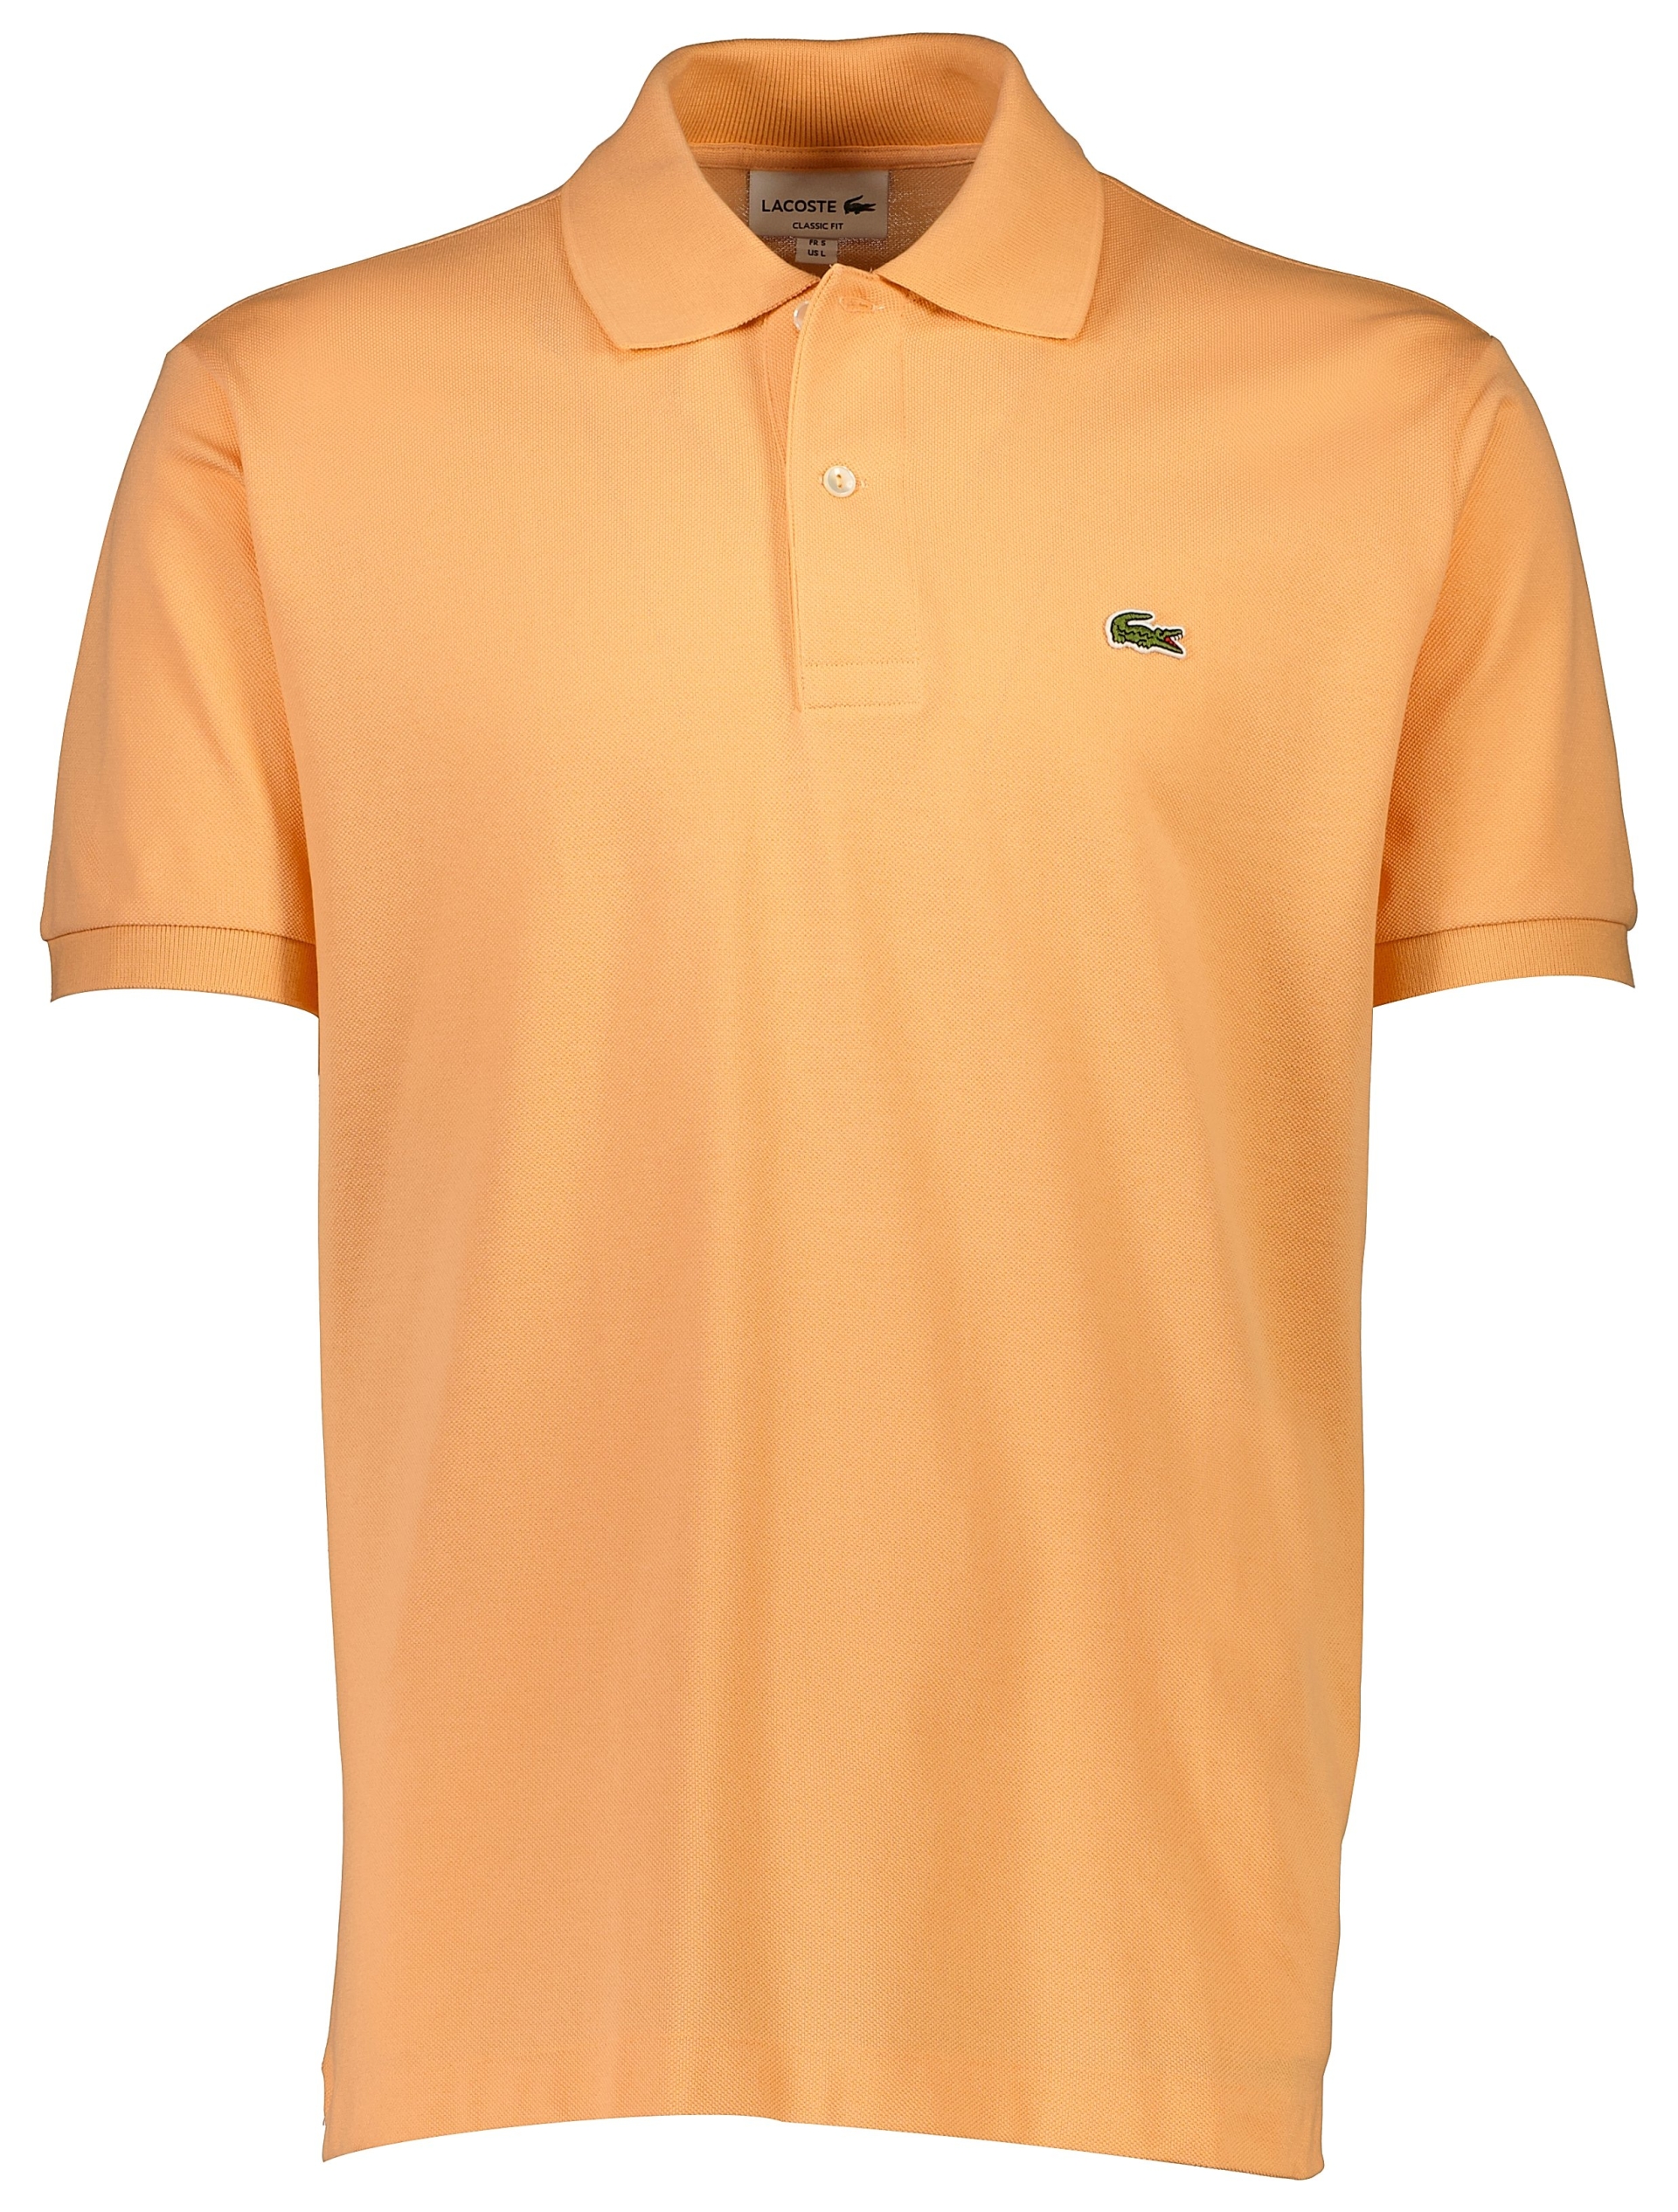 Lacoste Poloshirt orange / ixy lt abricot